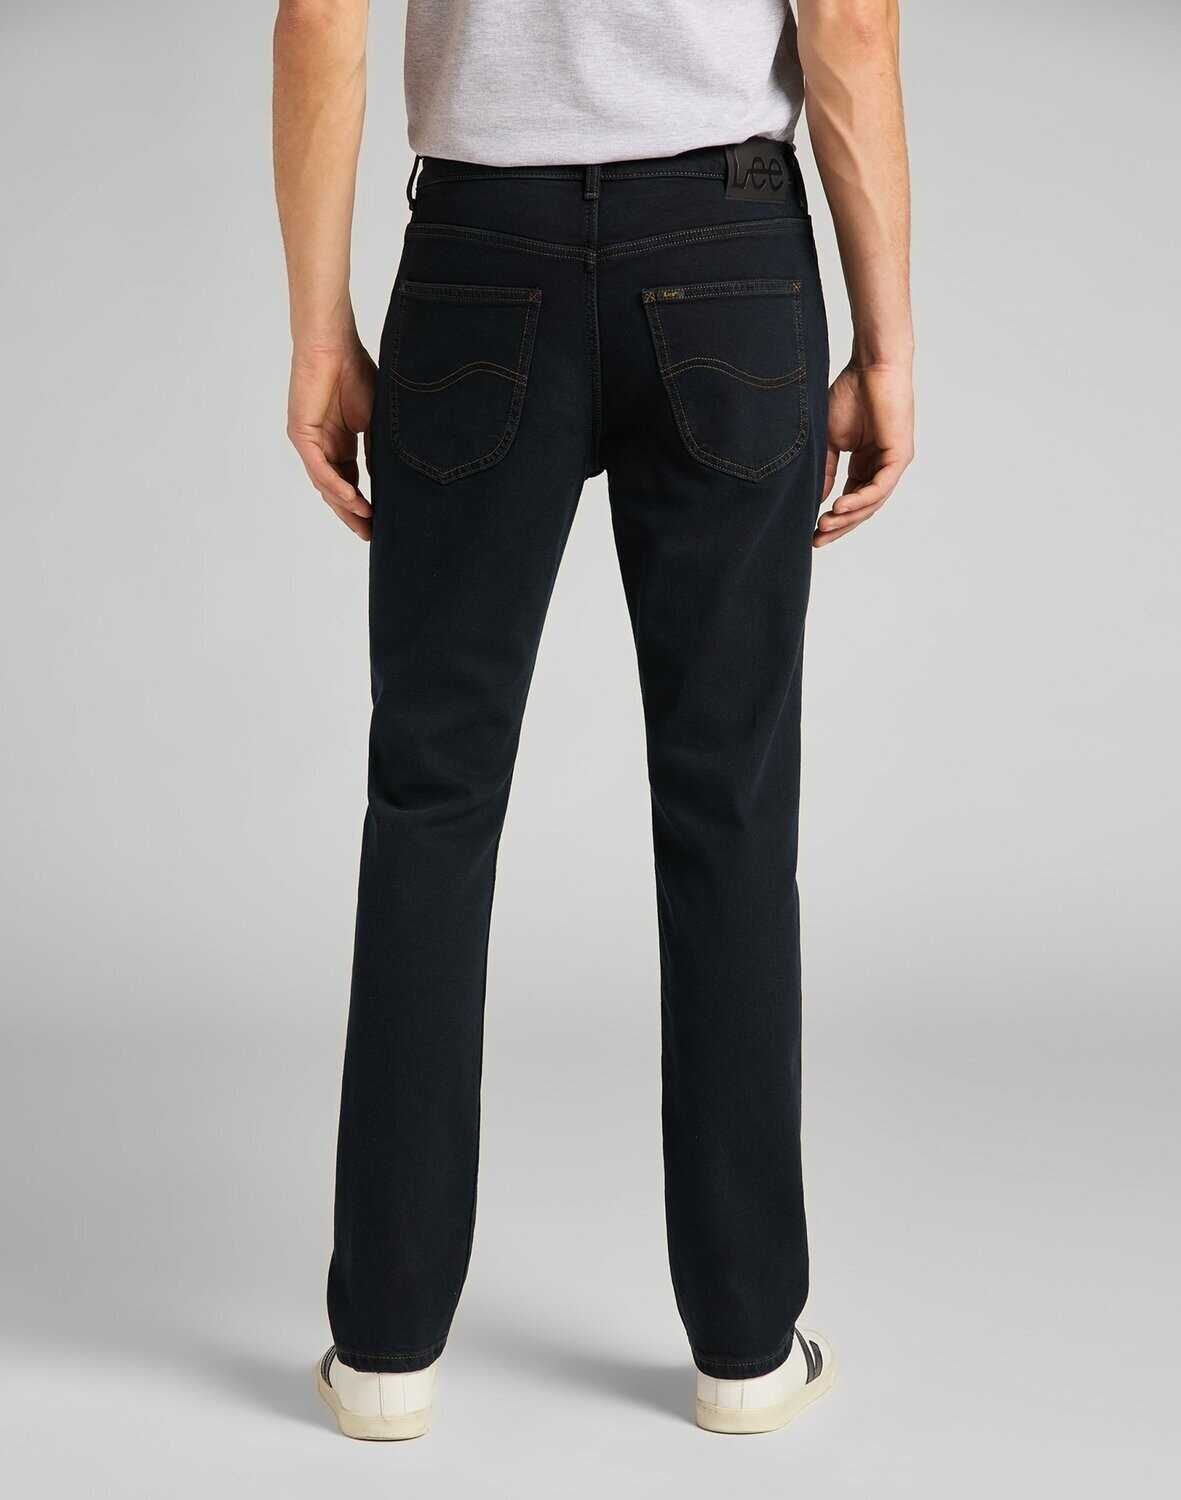 Blugi Lee Men's Brooklyn straight jeans, Blue black 46W/32 marime mare